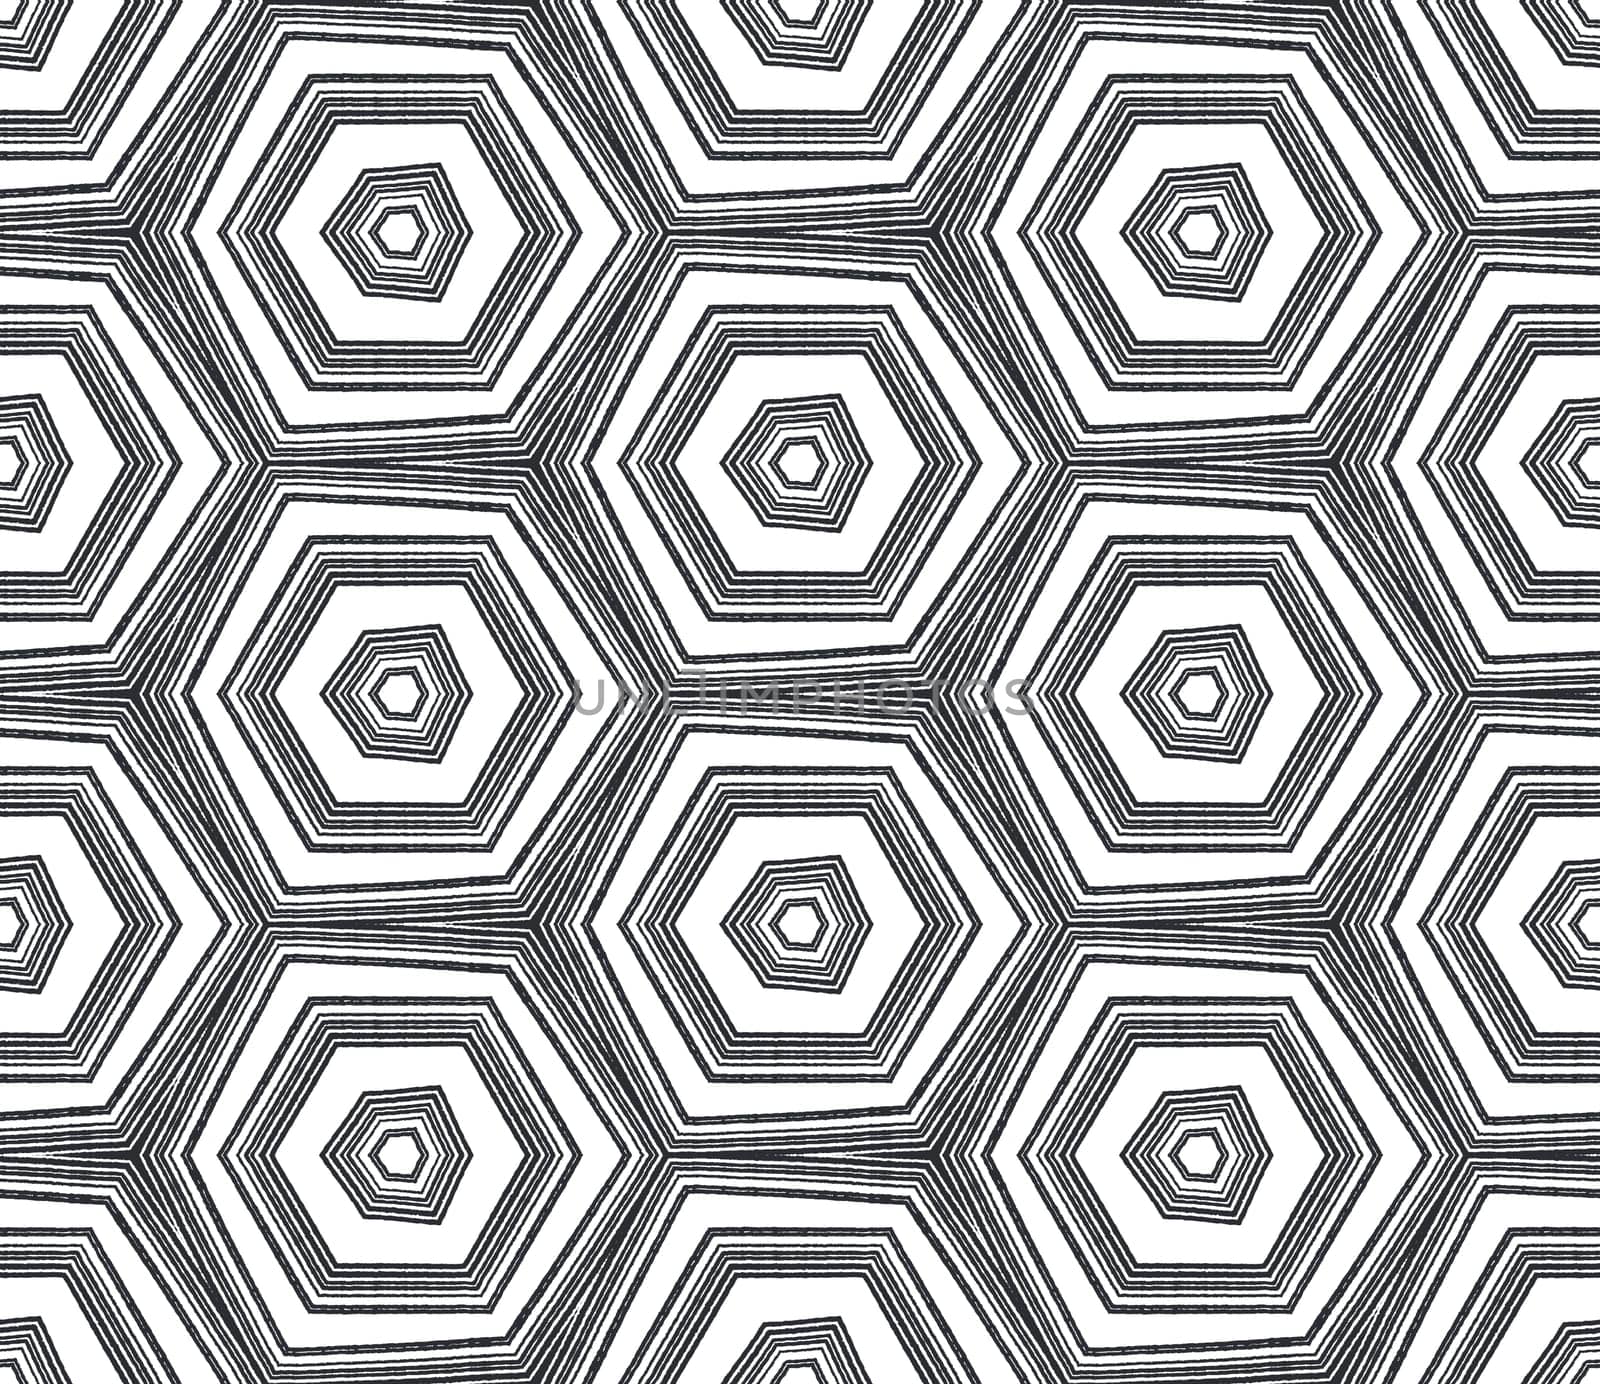 Tiled watercolor pattern. Black symmetrical by beginagain